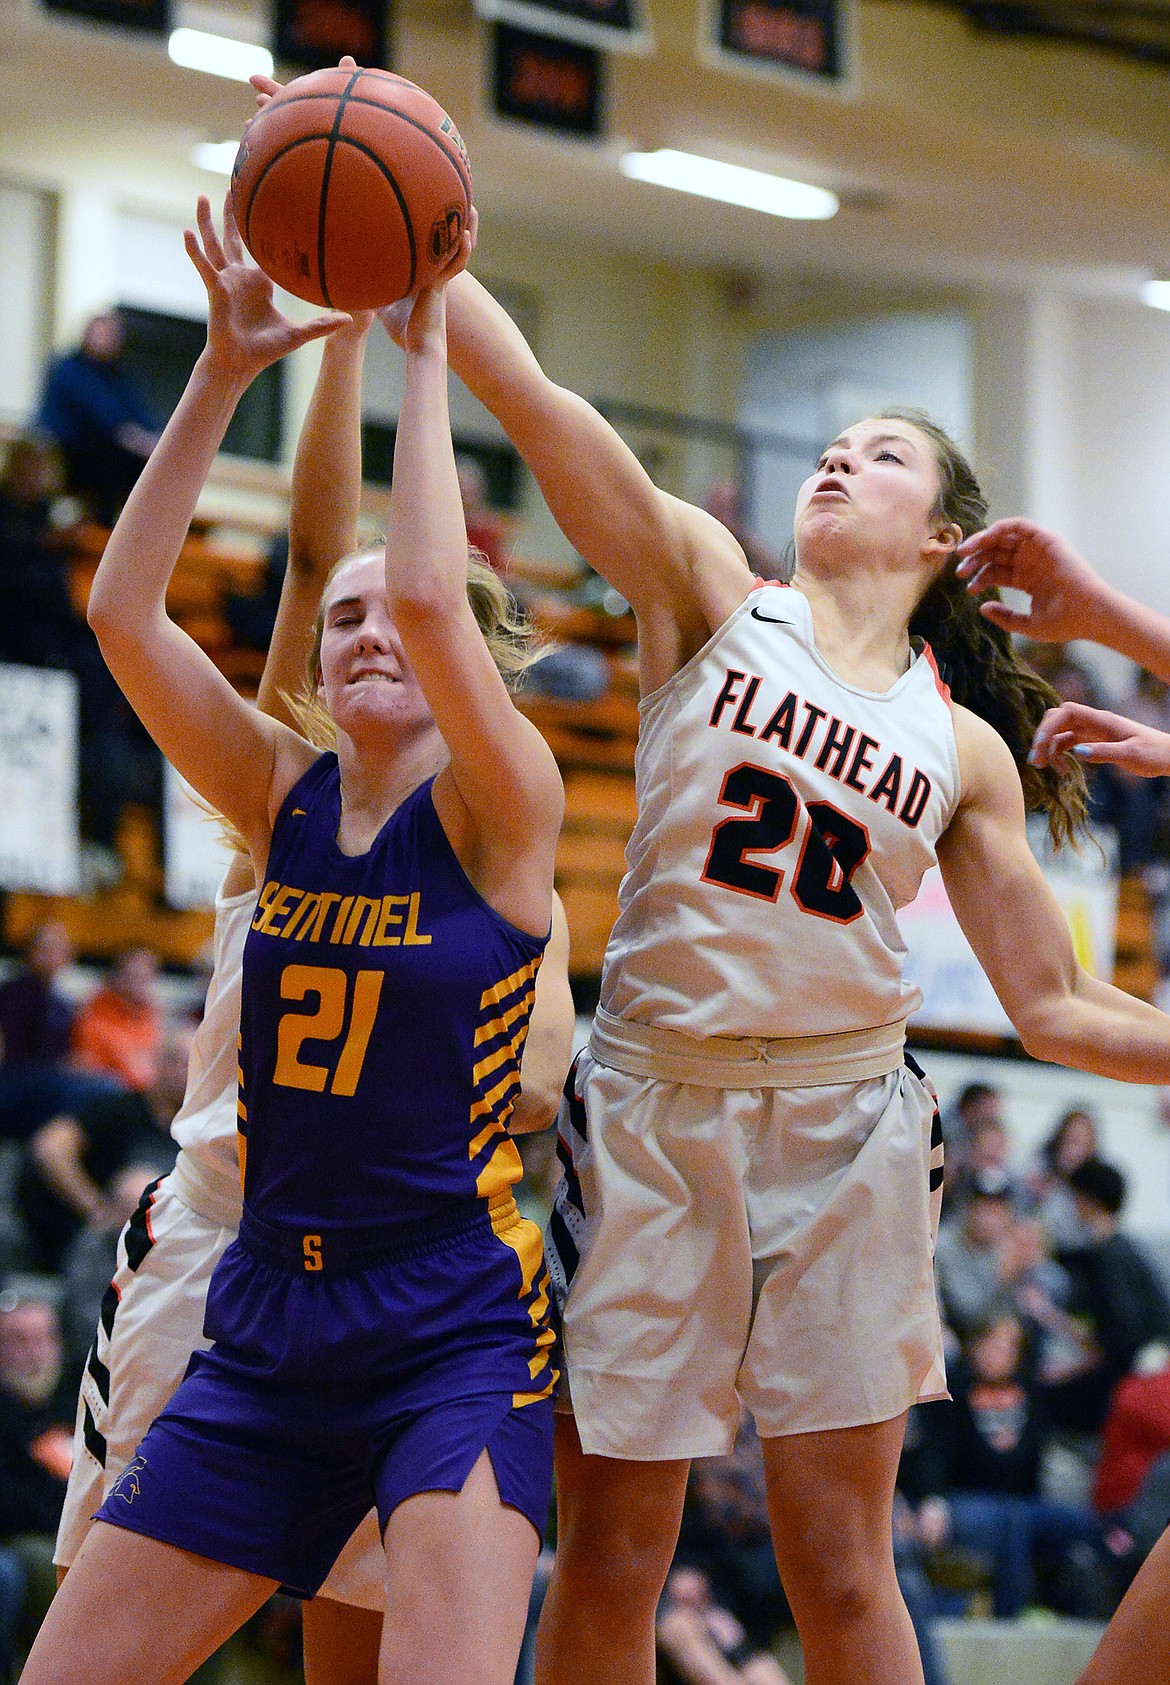 Flathead's Bridget Crowley (20) battles for a rebound with Missoula Sentinel's Challis Westwater (21) at Flathead High School on Thursday. (Casey Kreider/Daily Inter Lake)